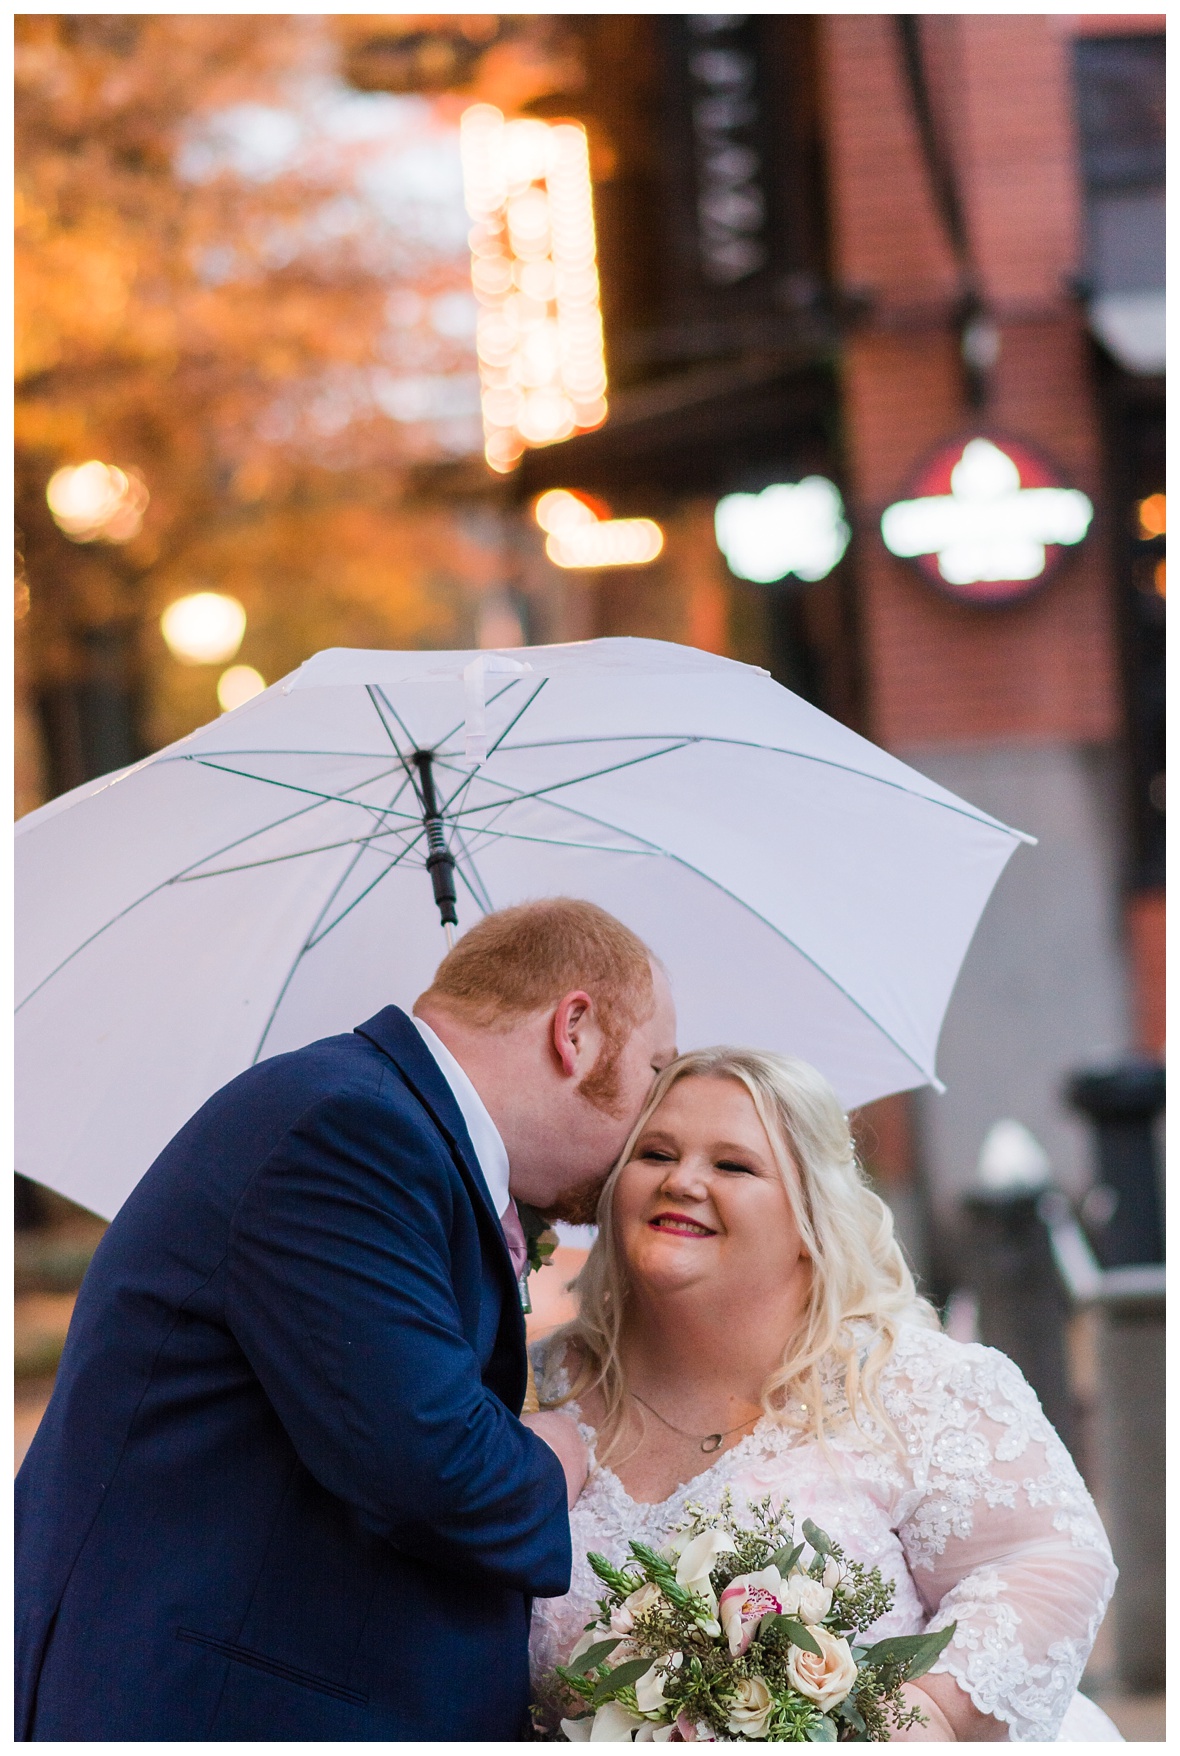 white umbrella for wedding